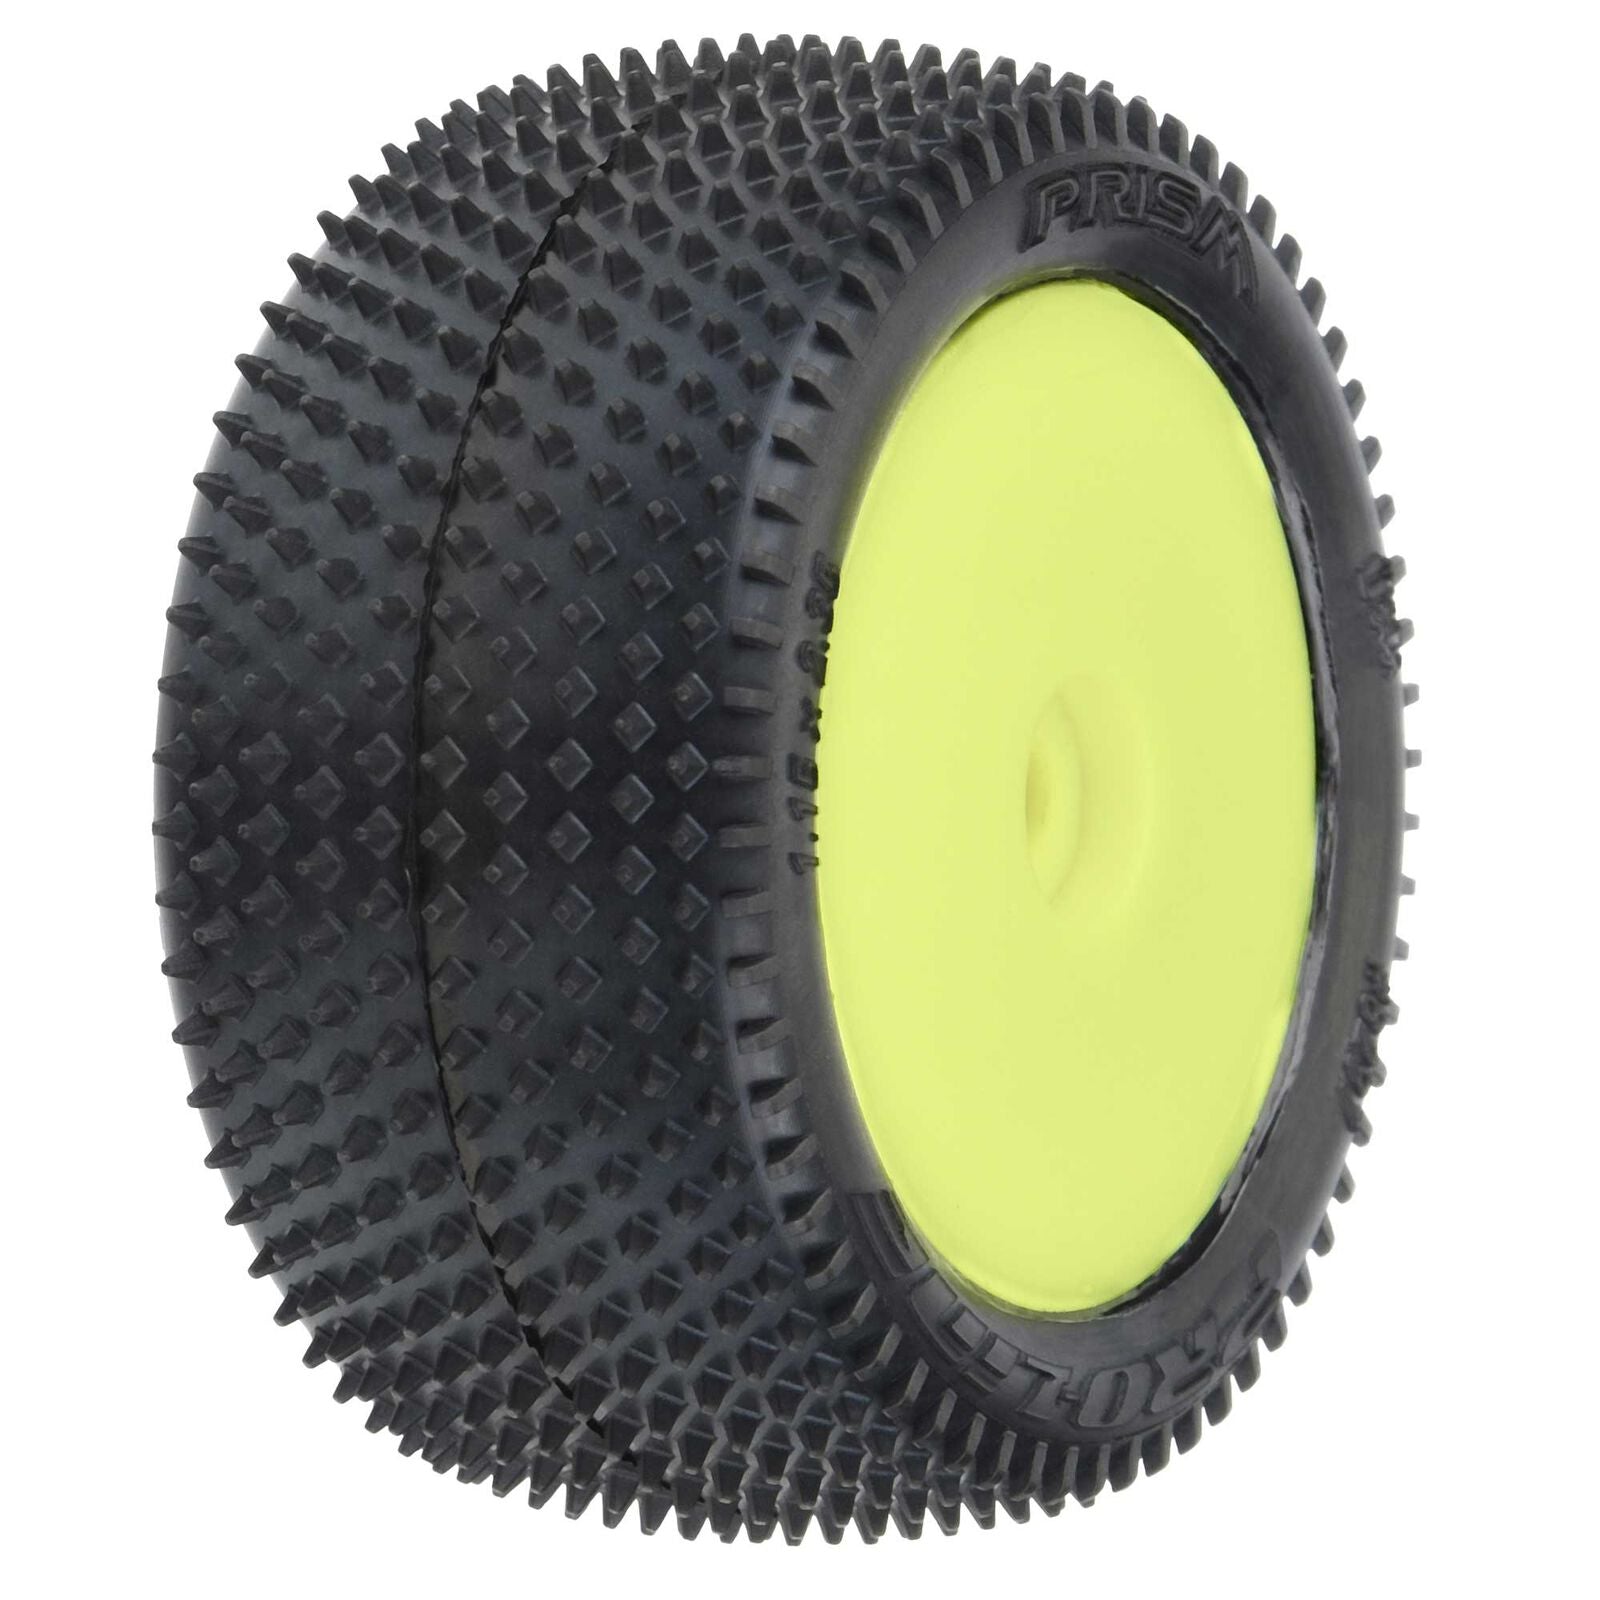 PROLINE 8297-12 1/18 Prism Rear Carpet Mini-B Tires Mounted 8mm Yellow Wheels (2)